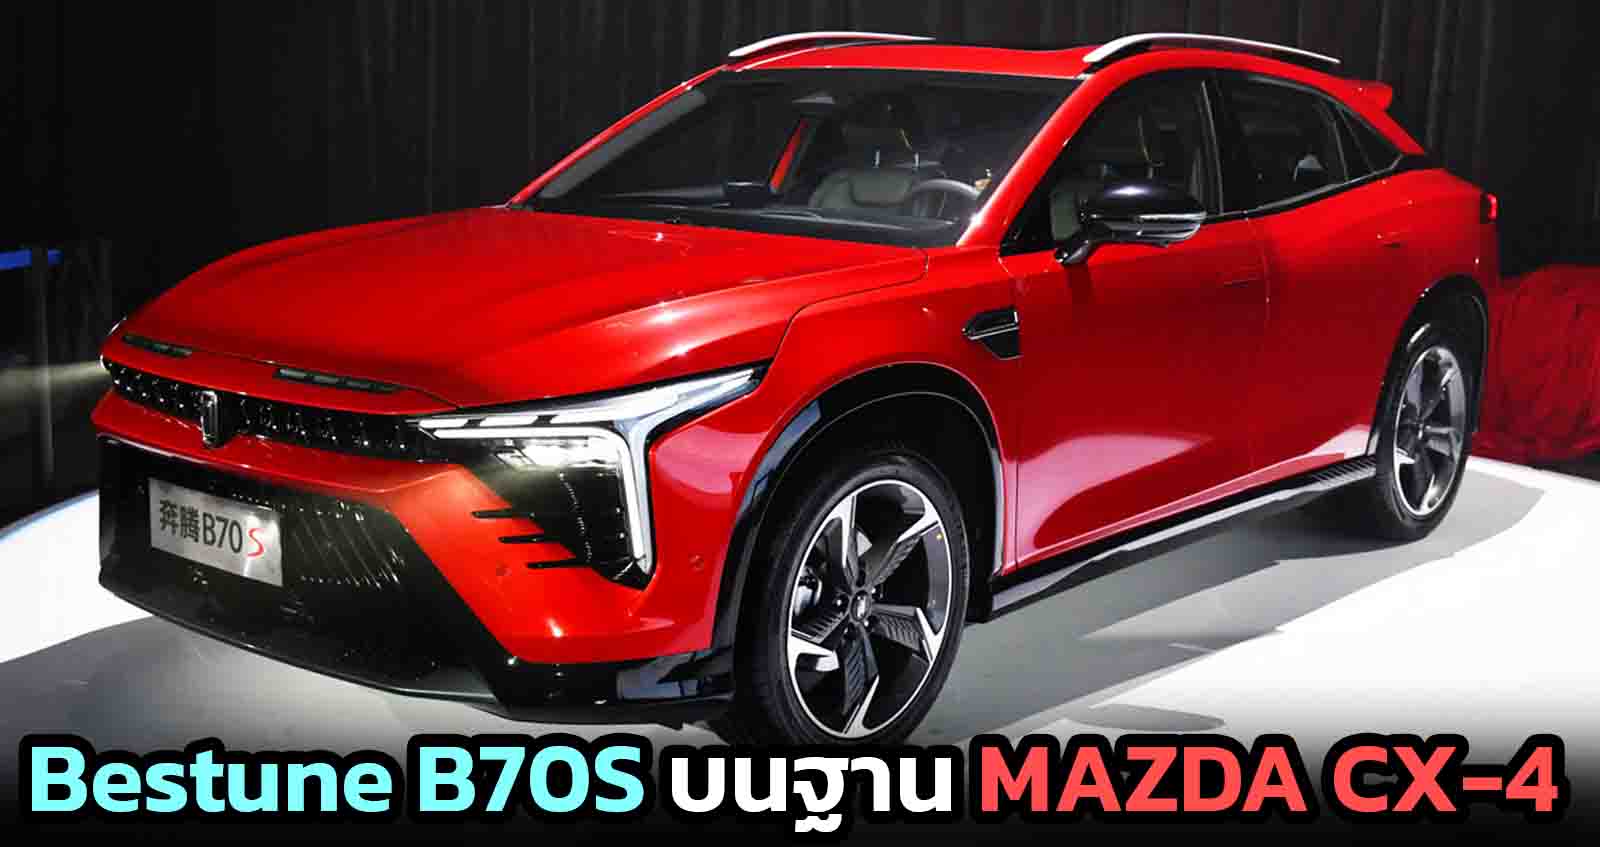 Bestune B70S บนฐาน MAZDA CX-4 Coupe ราคา 00 – 753,000 บาท 2.0T 224 แรงม้า ในจีน